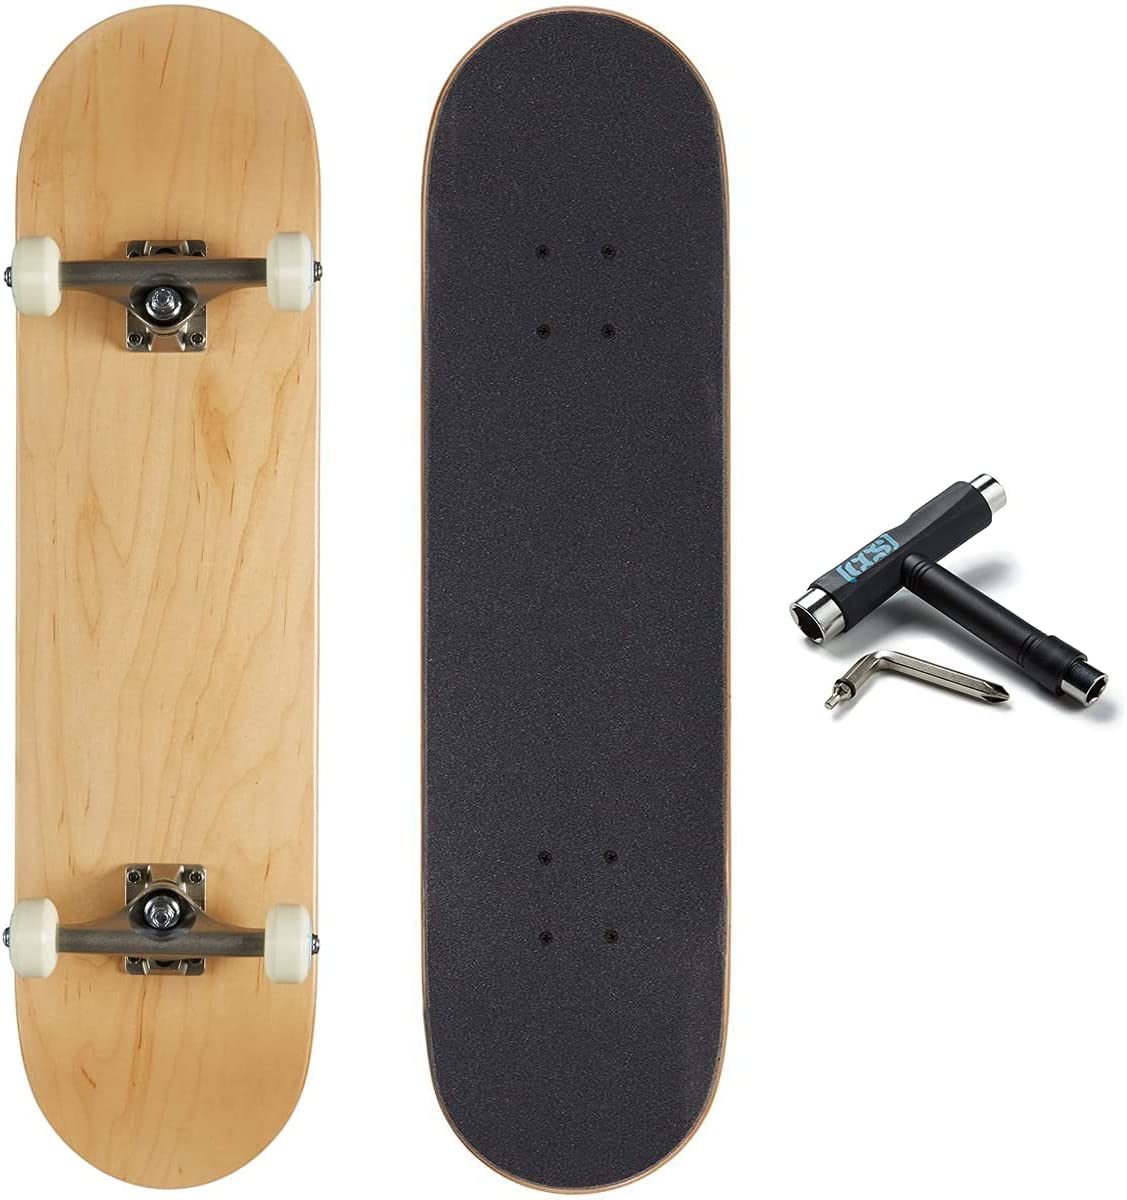 CCS Classic Maple Wood Skateboard, 27.75 x 7-Inch